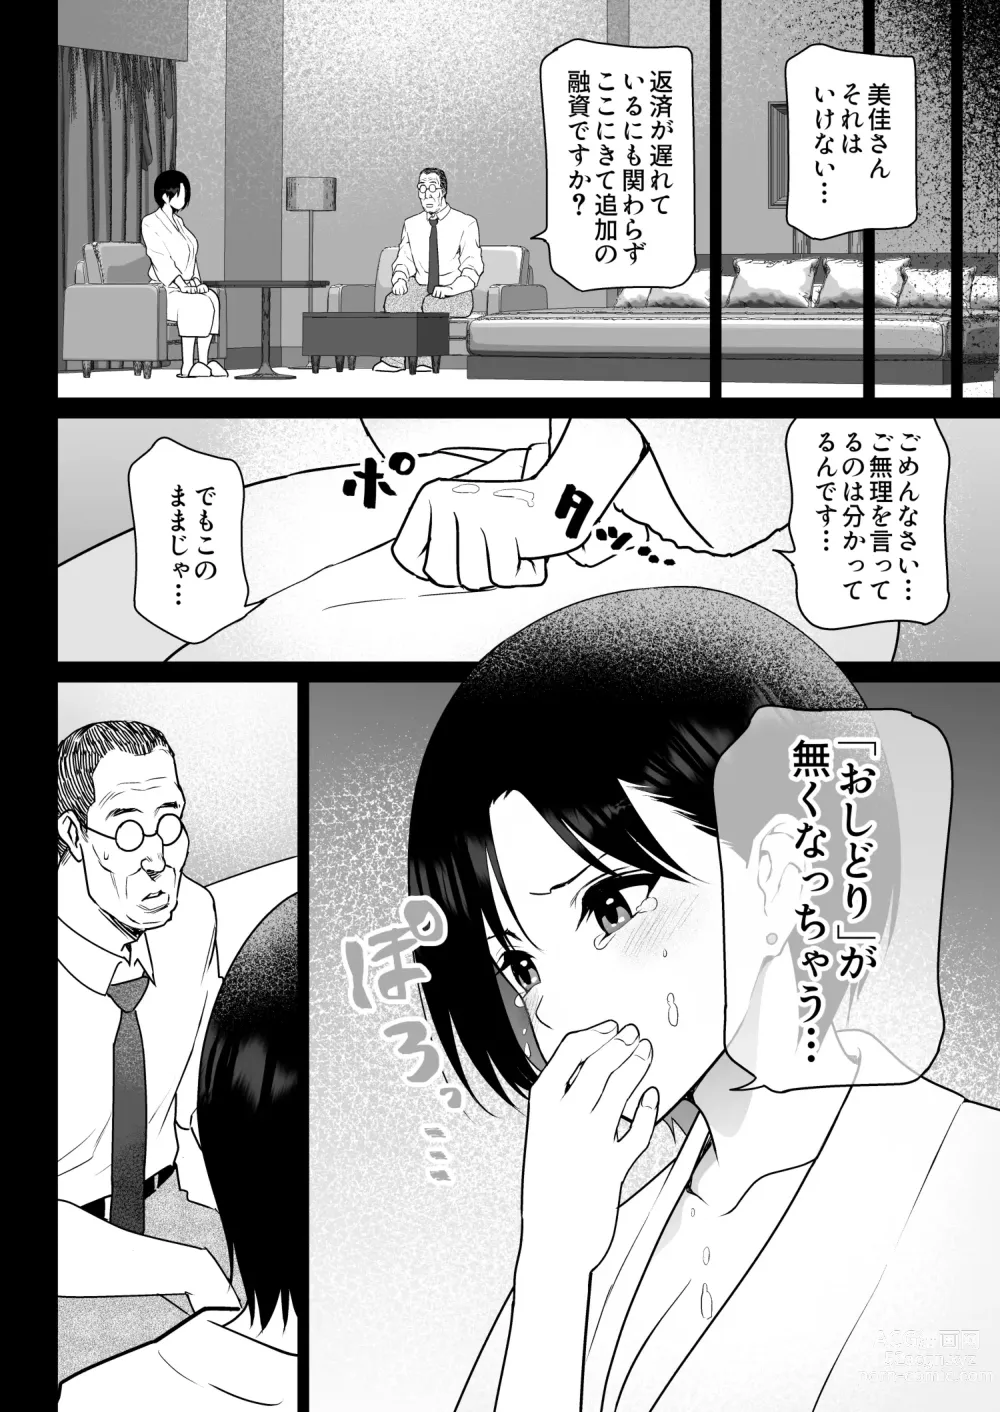 Page 15 of doujinshi Oshidori Fuufu Yakitorare